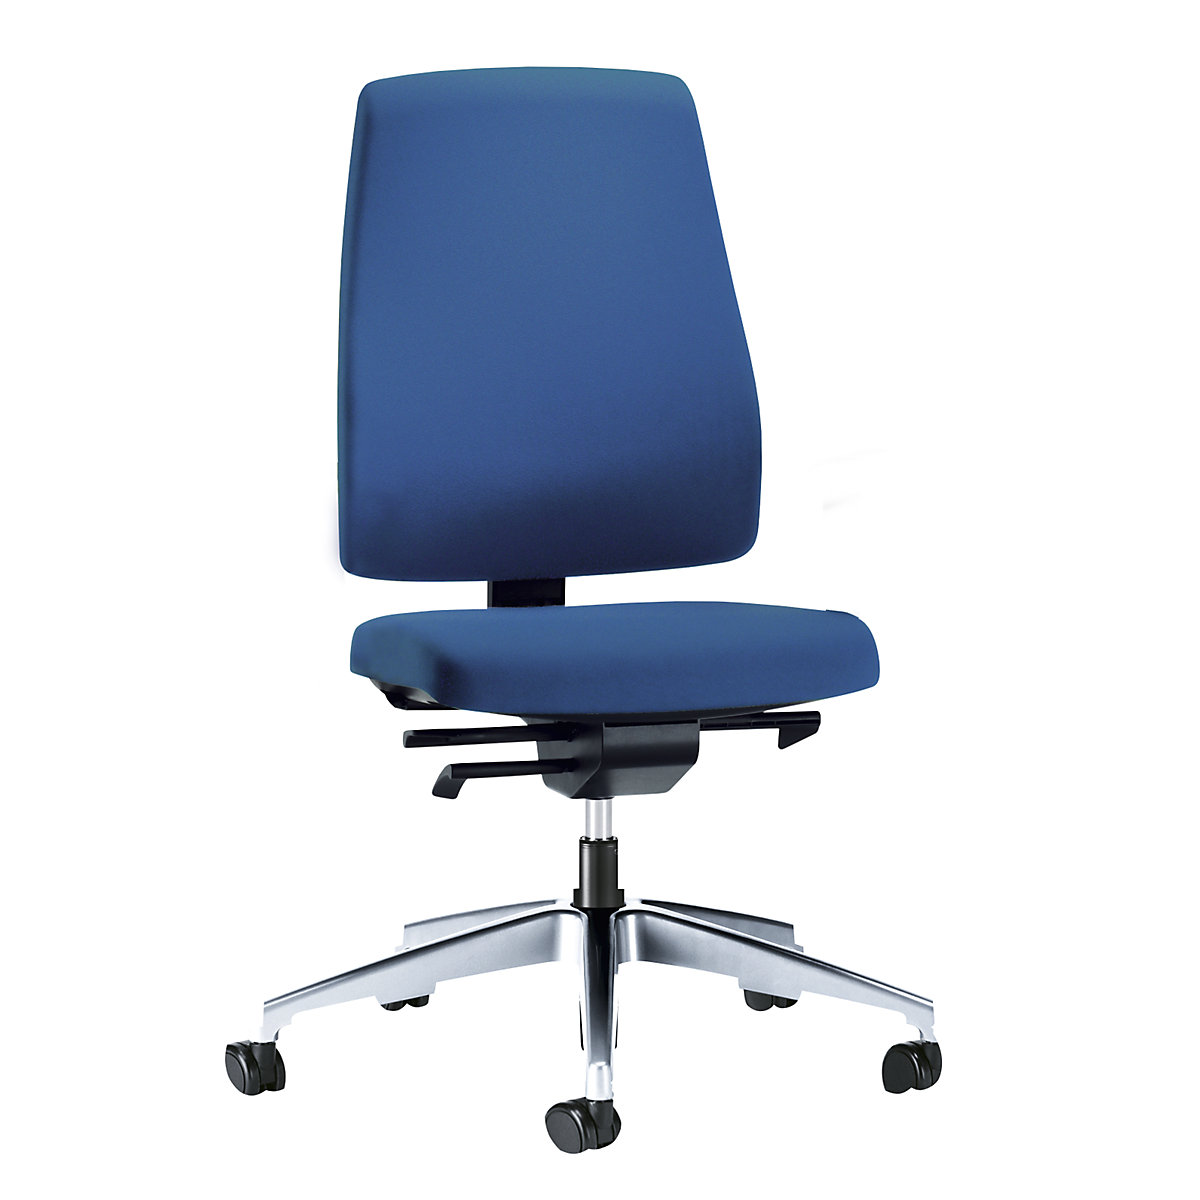 GOAL office swivel chair, back rest height 530 mm – interstuhl, polished frame, with soft castors, gentian blue, seat depth 410 – 460 mm-4